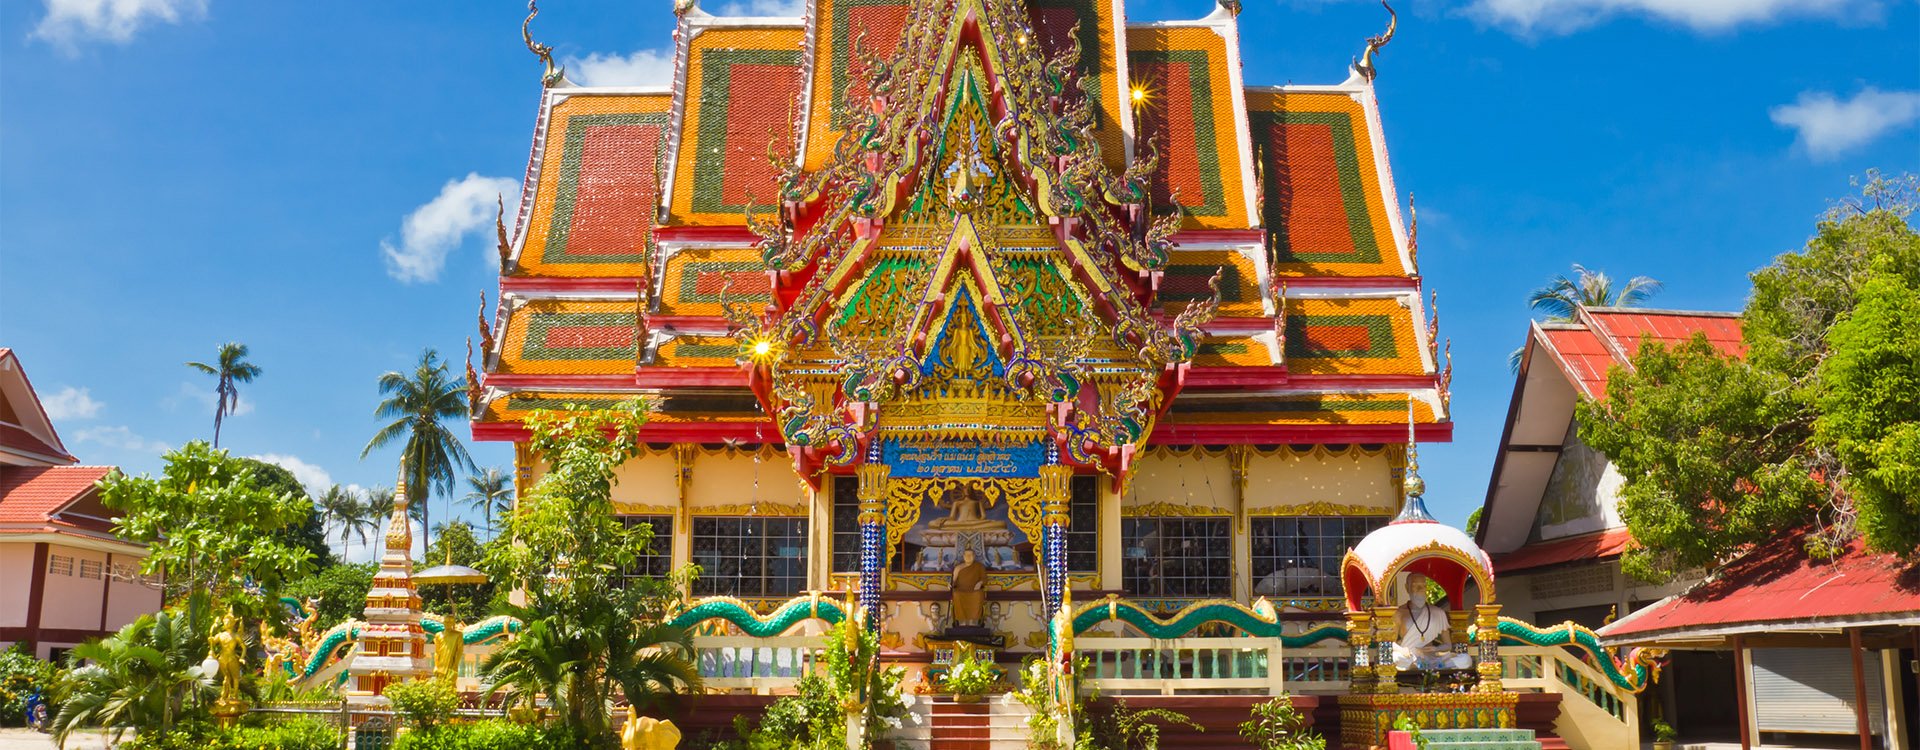 Wat Plai Laem temple Koh samui, Thailand on a clear sunny day